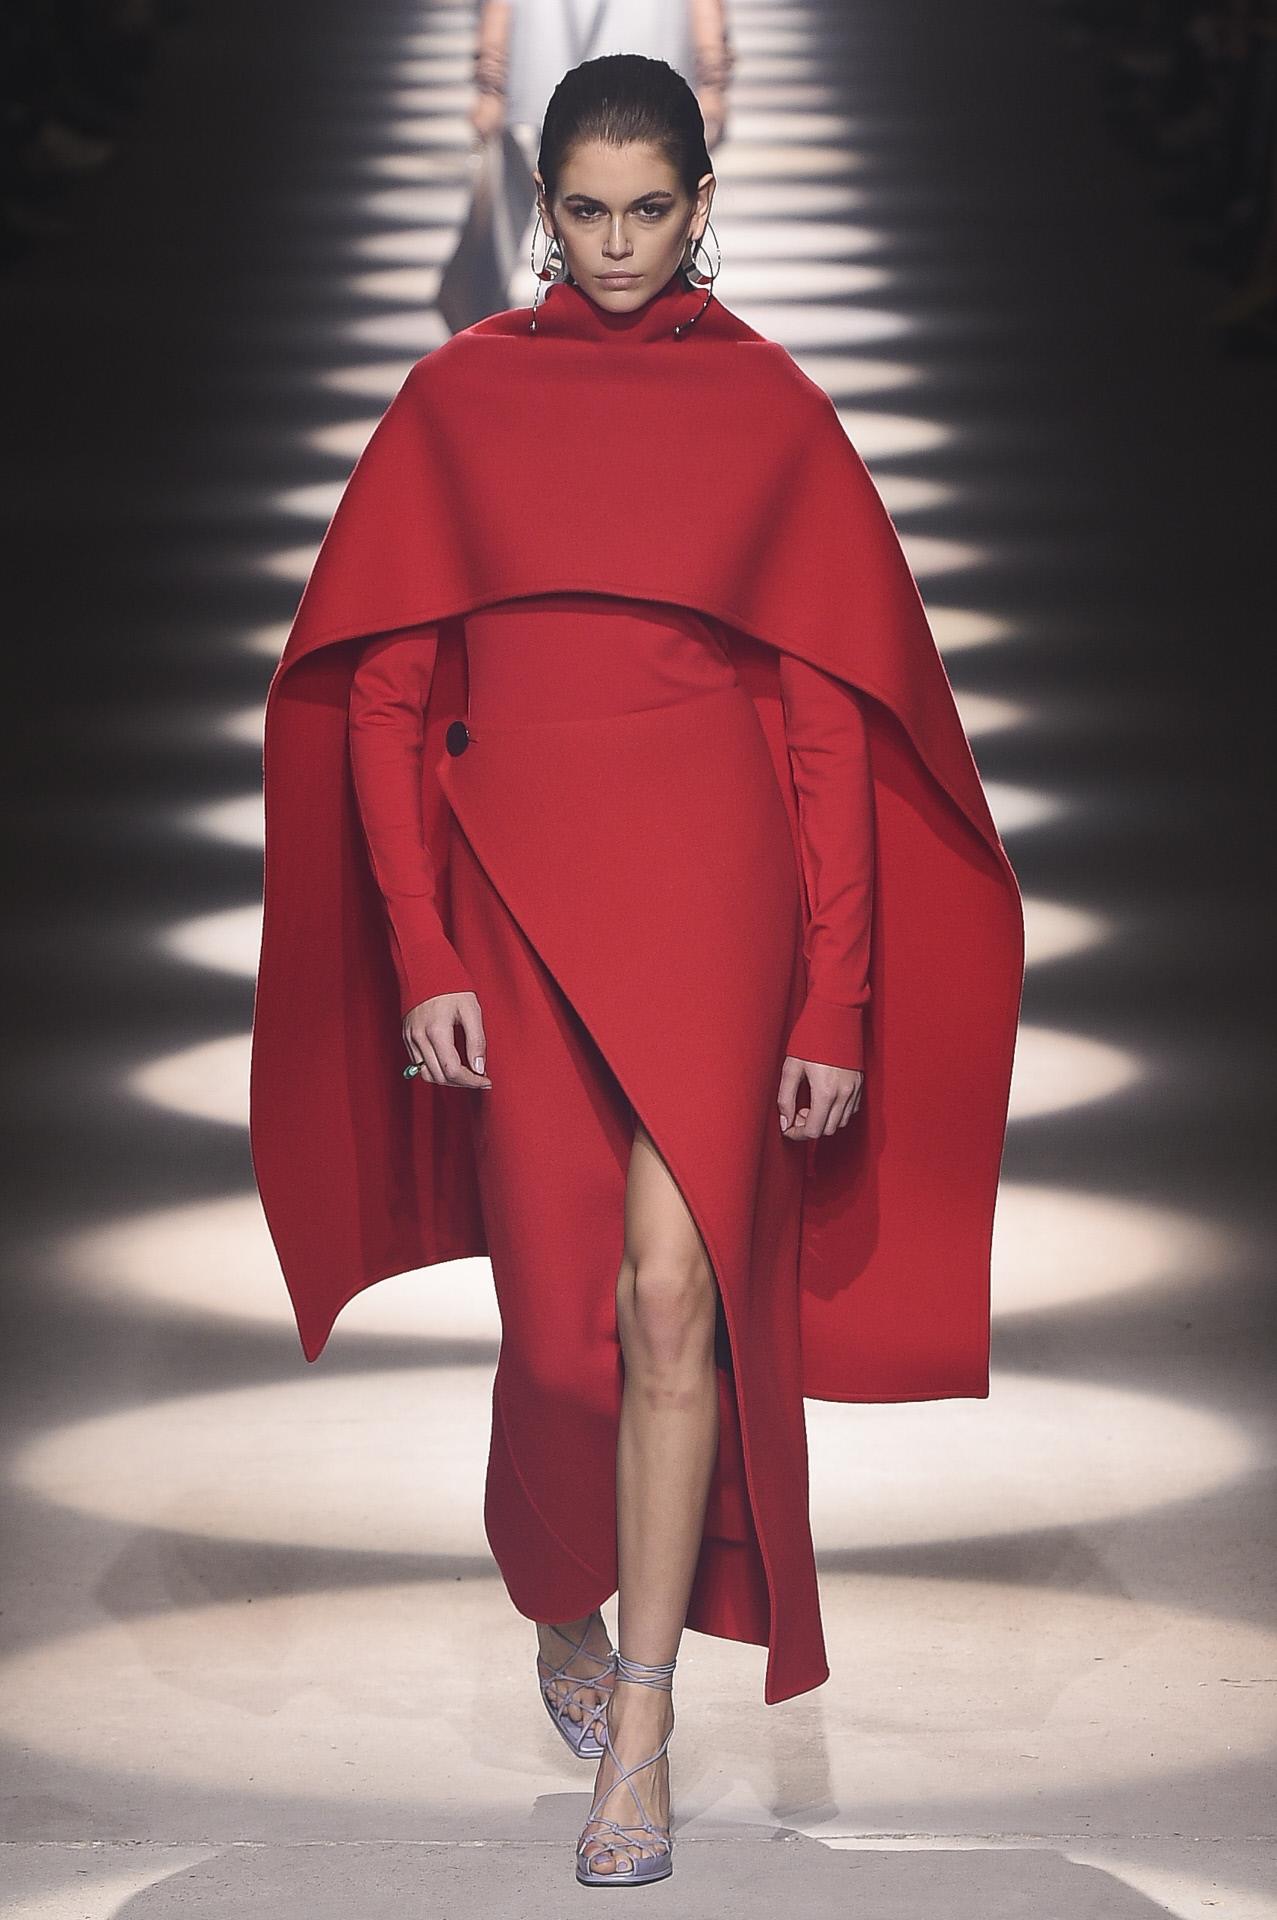 Semana de la moda de París, Givenchy